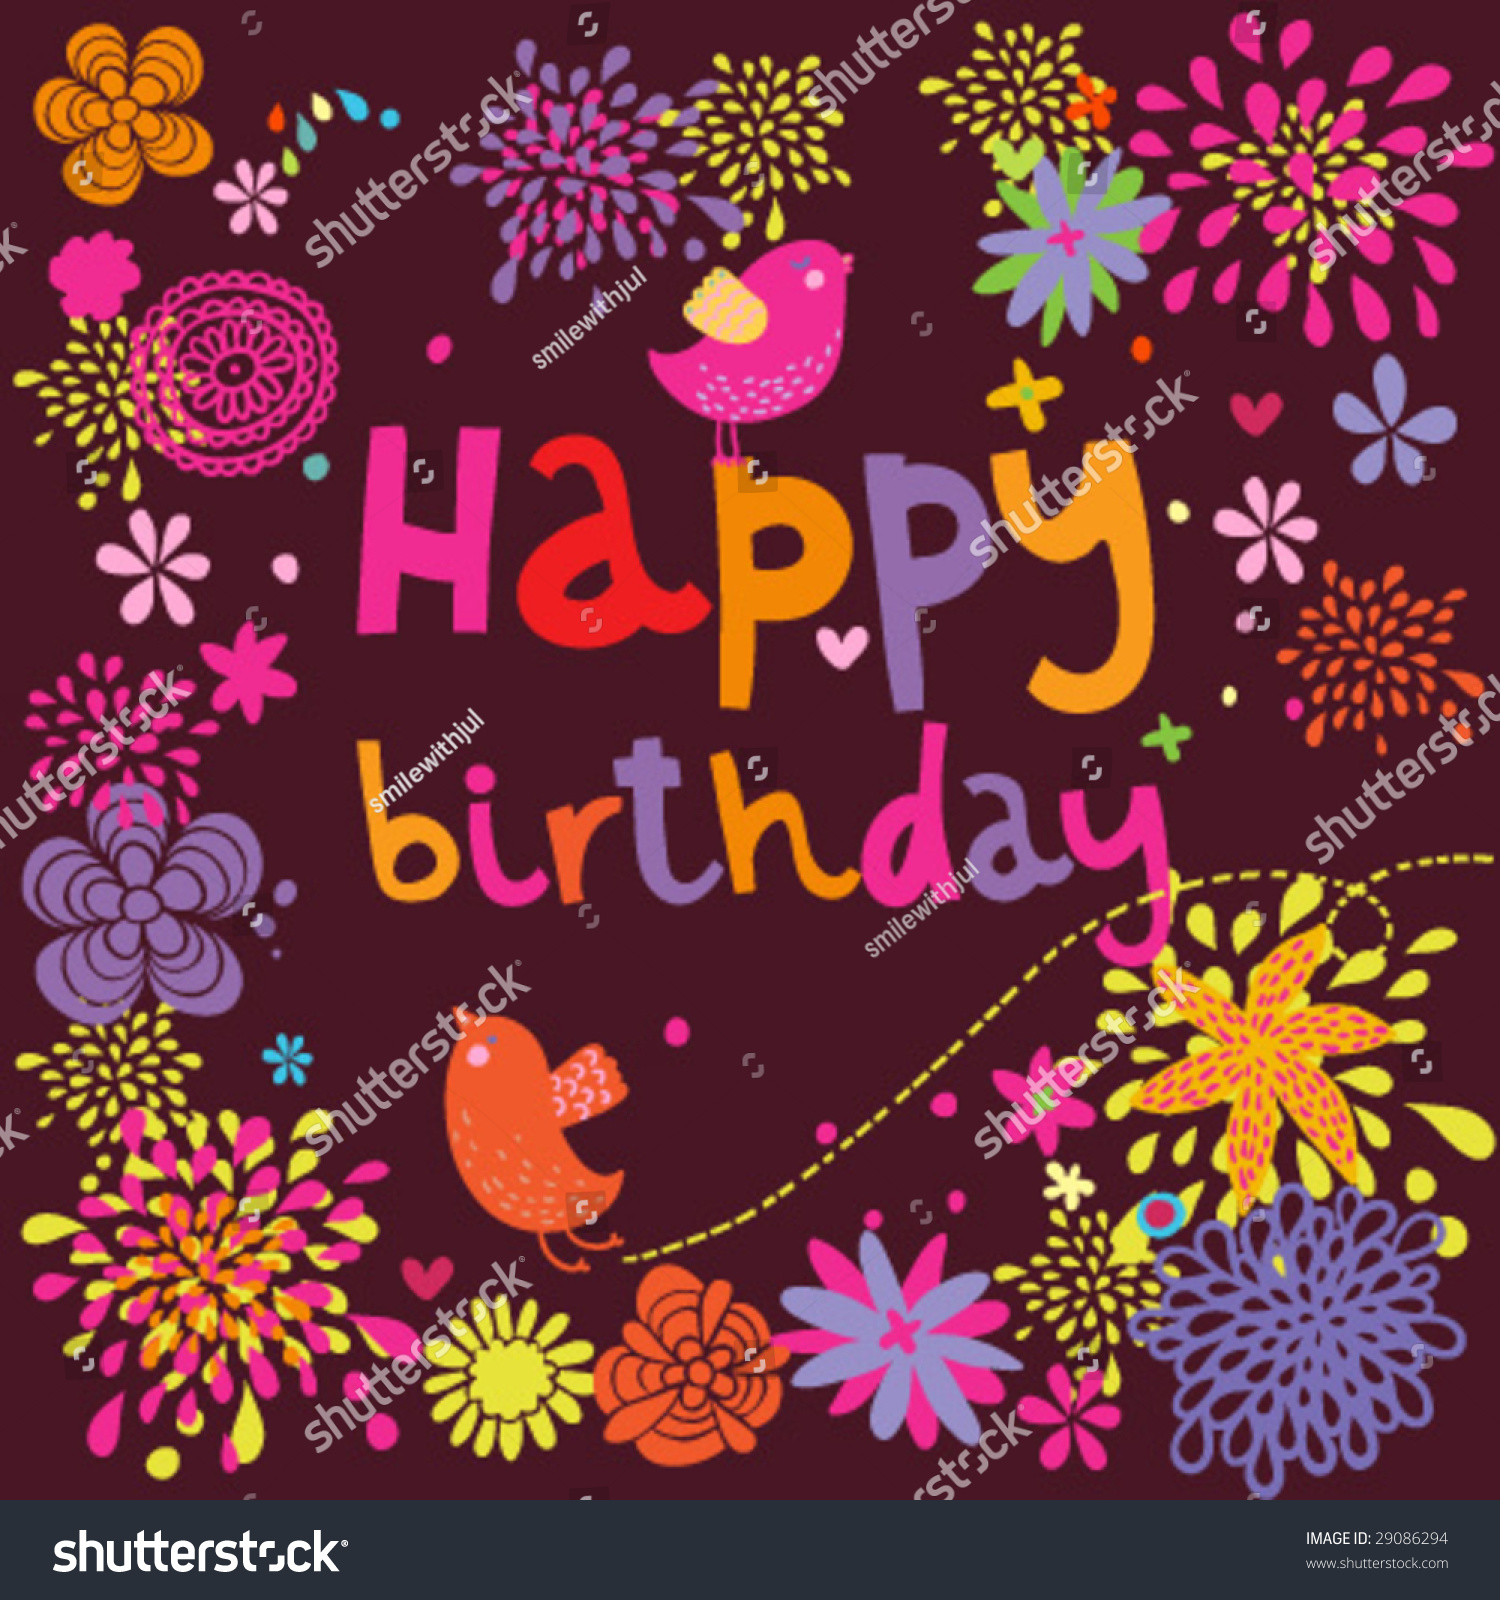 Bright Happy Birthday Background Stock Vector 29086294 ...